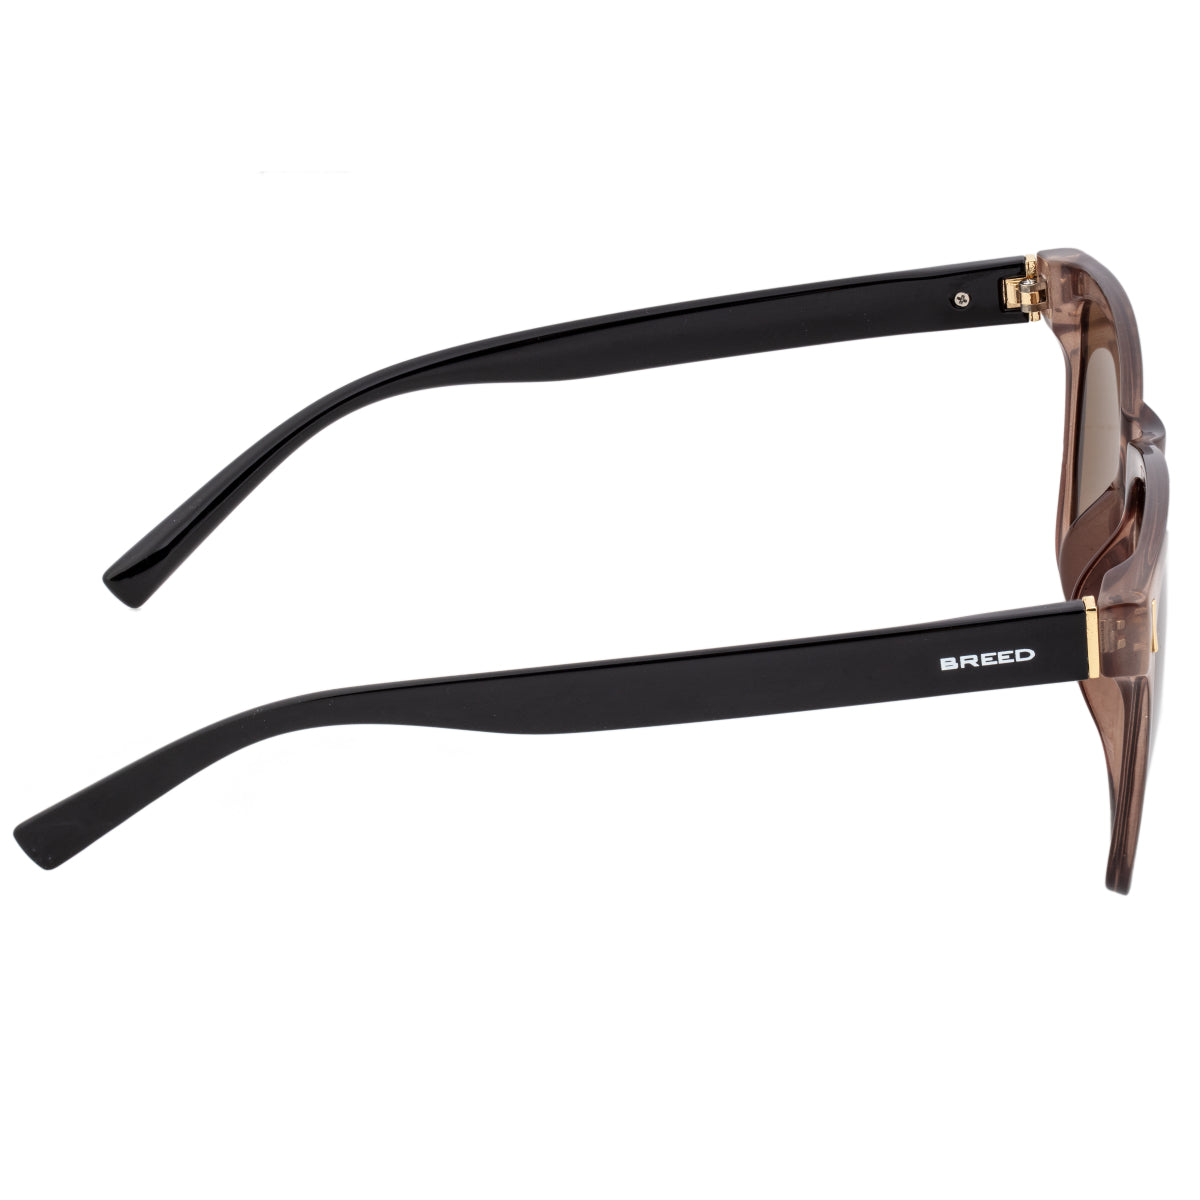 Breed Pictor Polarized Sunglasses - Brown/Black - BSG065BN